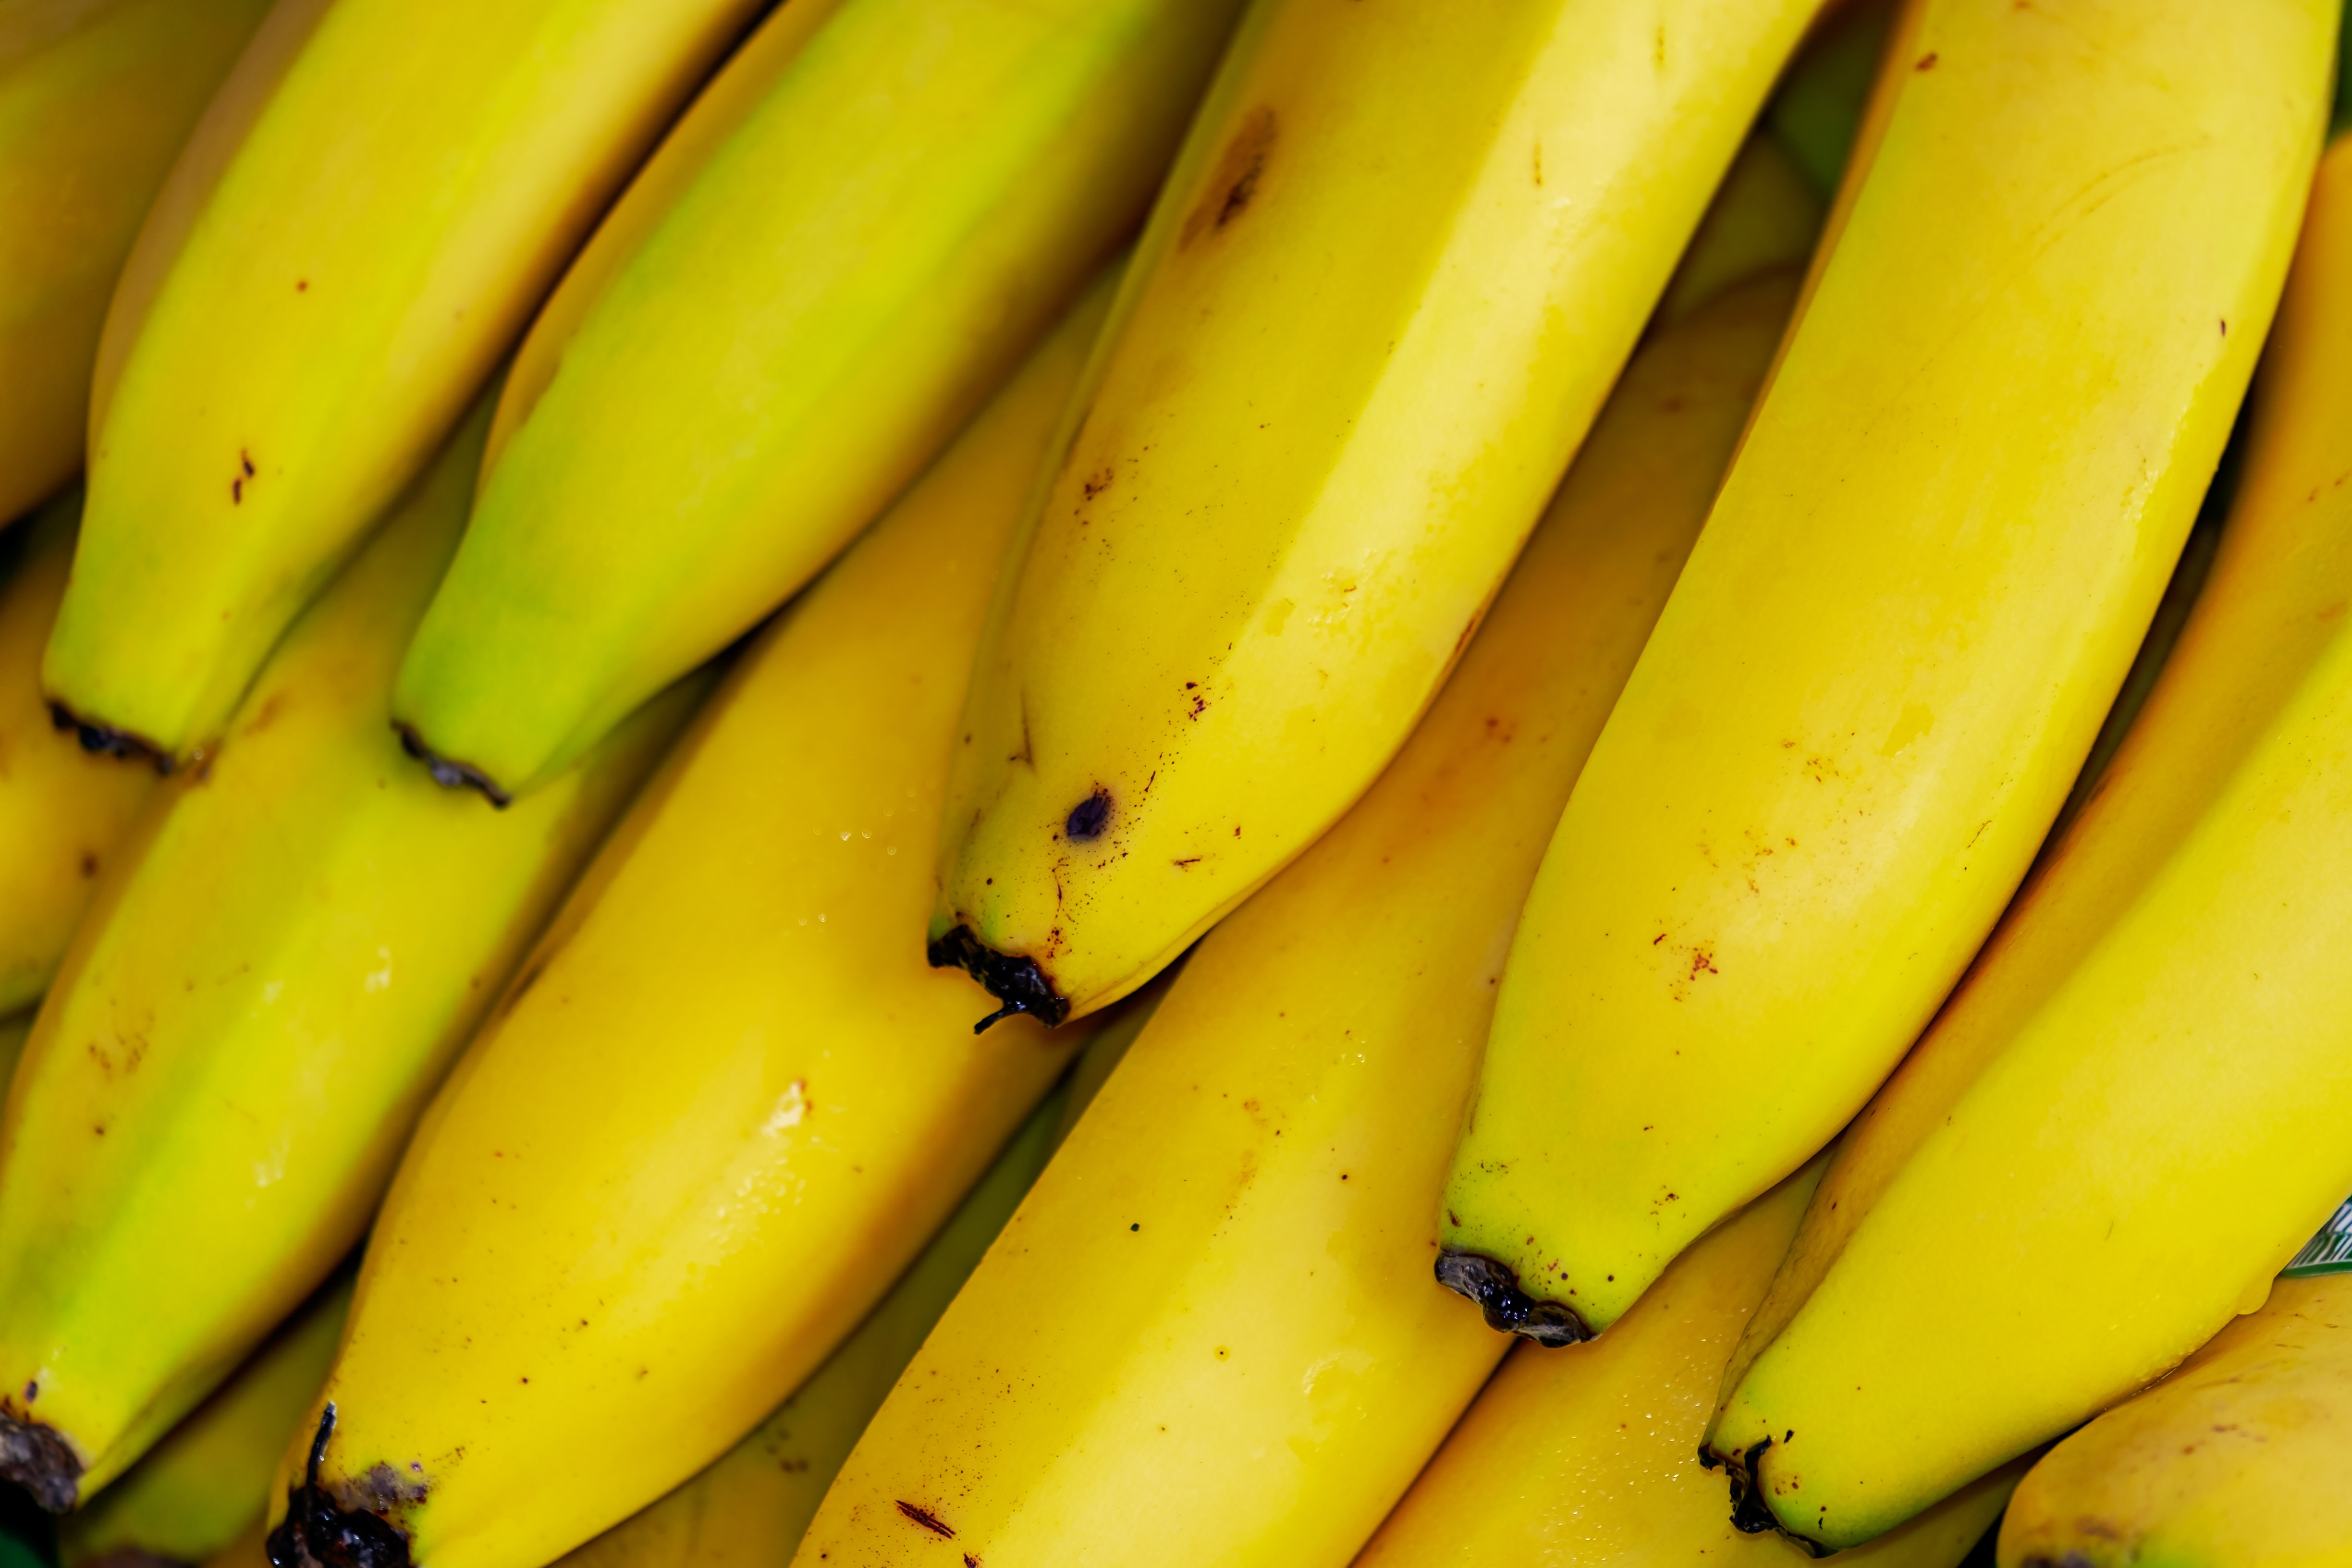 Google Algorithms - It's all bananas!